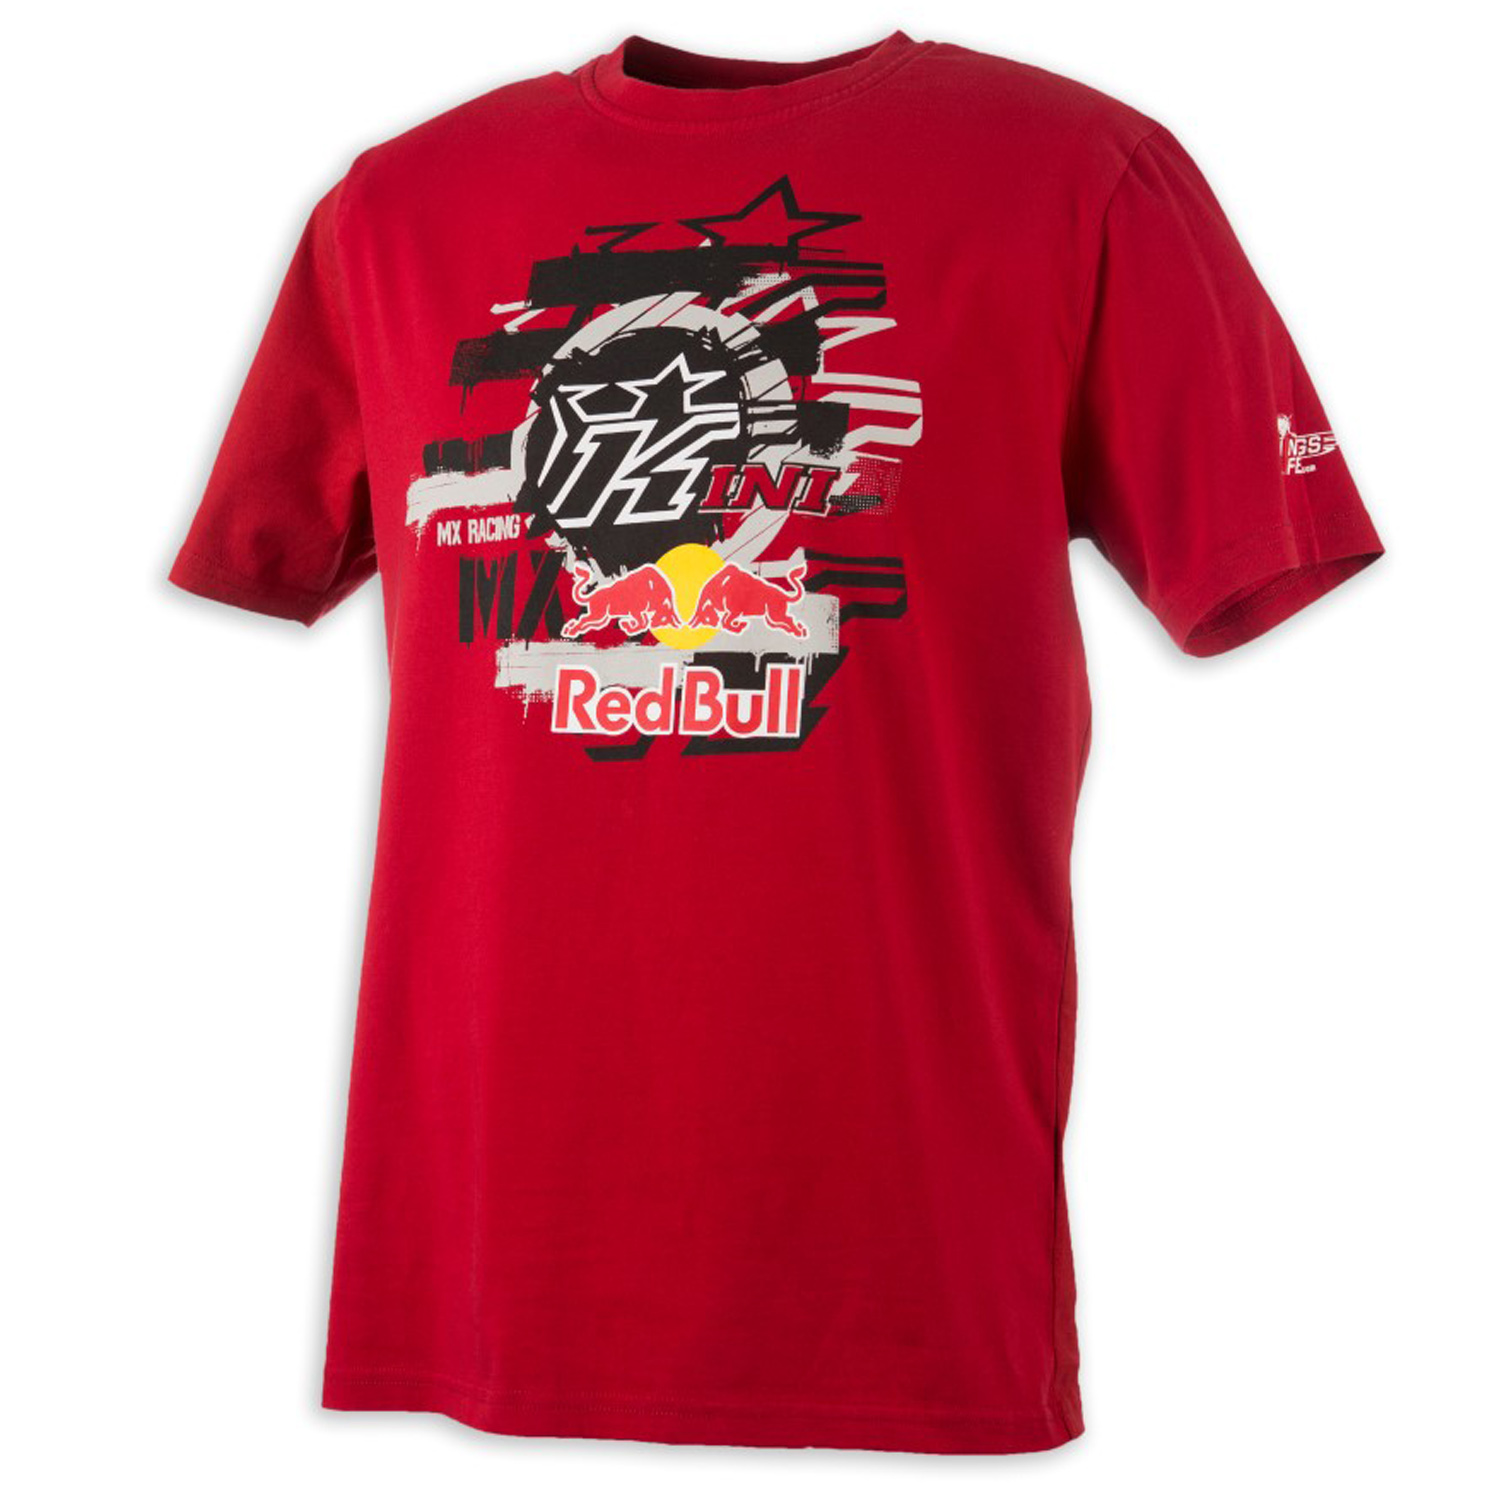 Kini Red Bull T-Shirt Layered Red